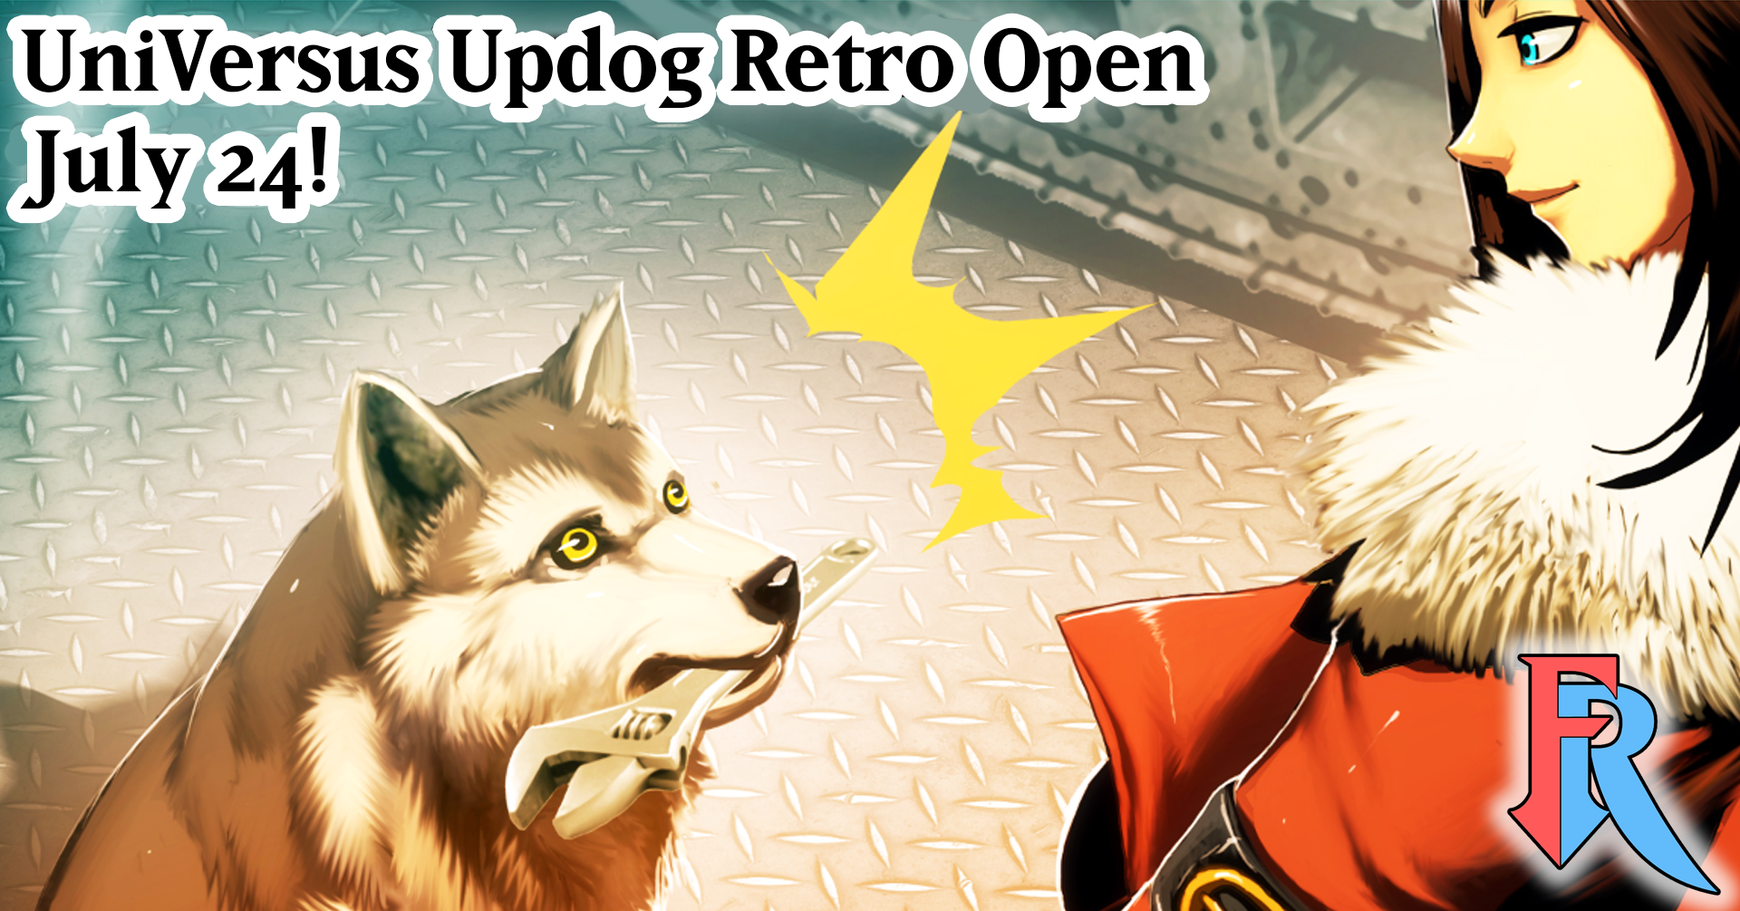 The Updog Retro Open!